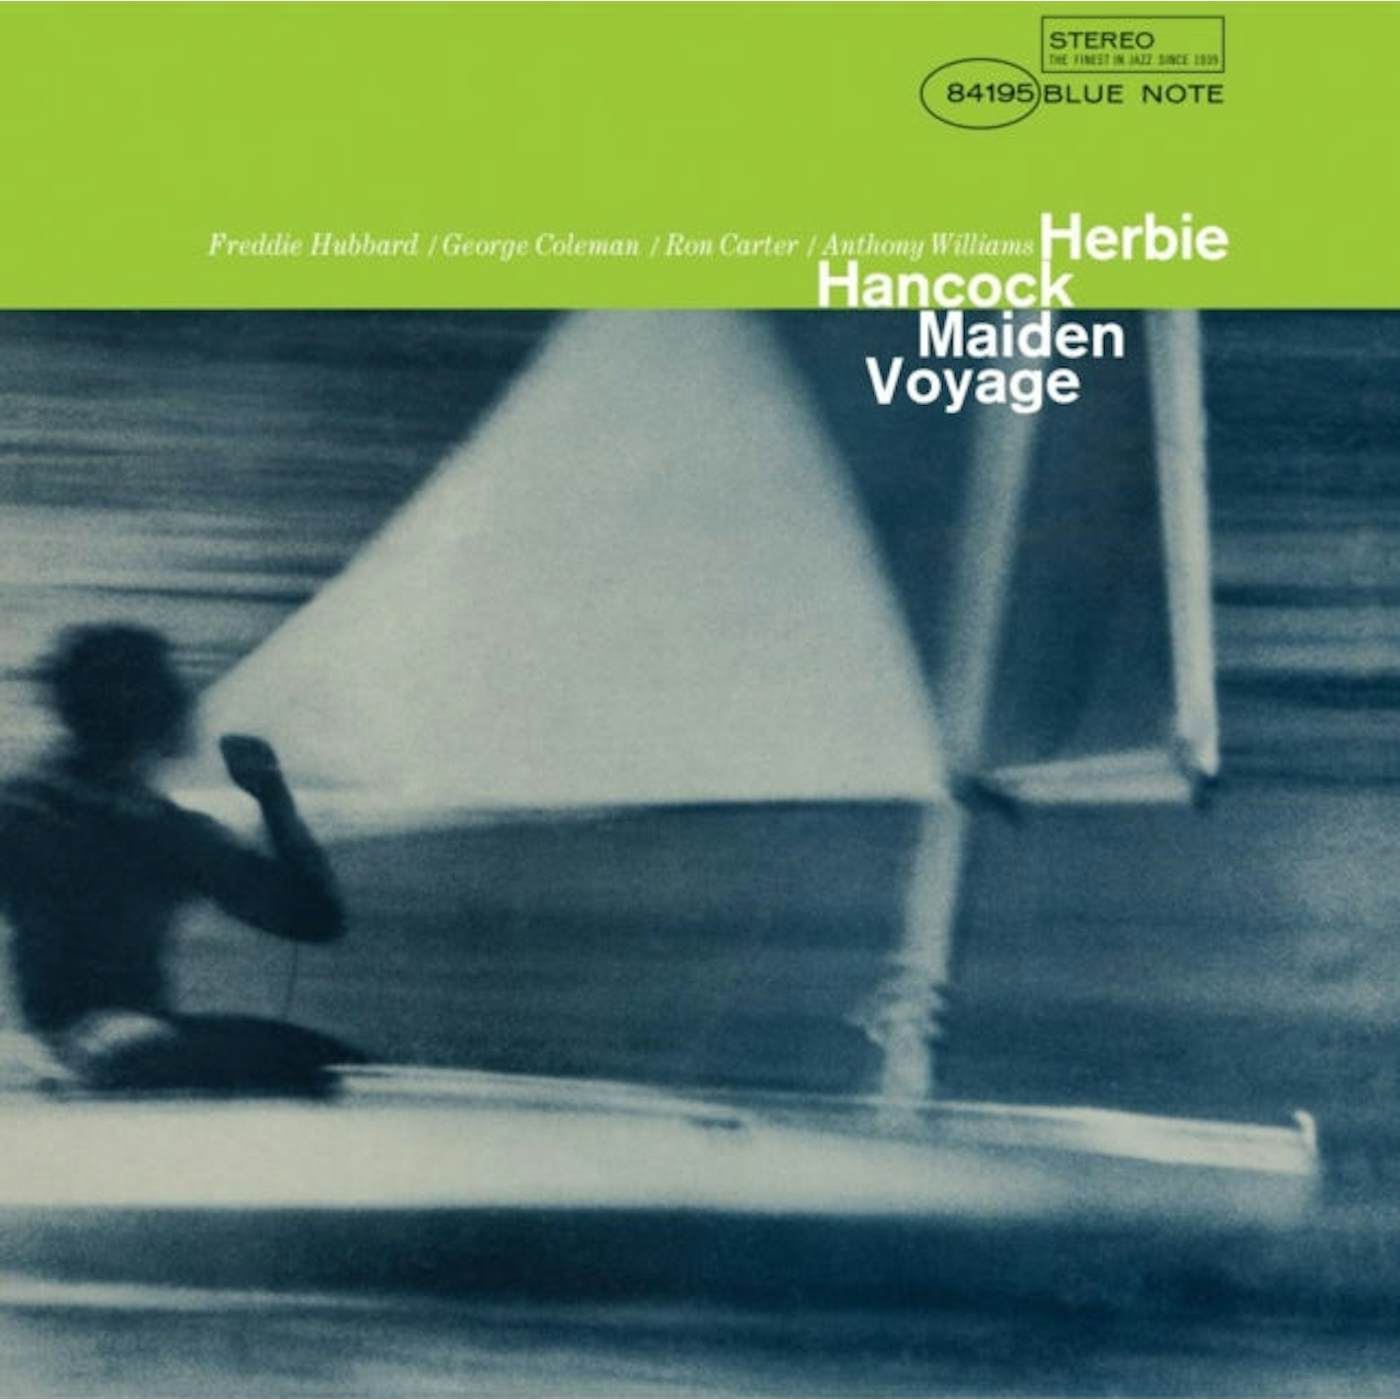 Herbie Hancock LP Vinyl Record - Maiden Voyage